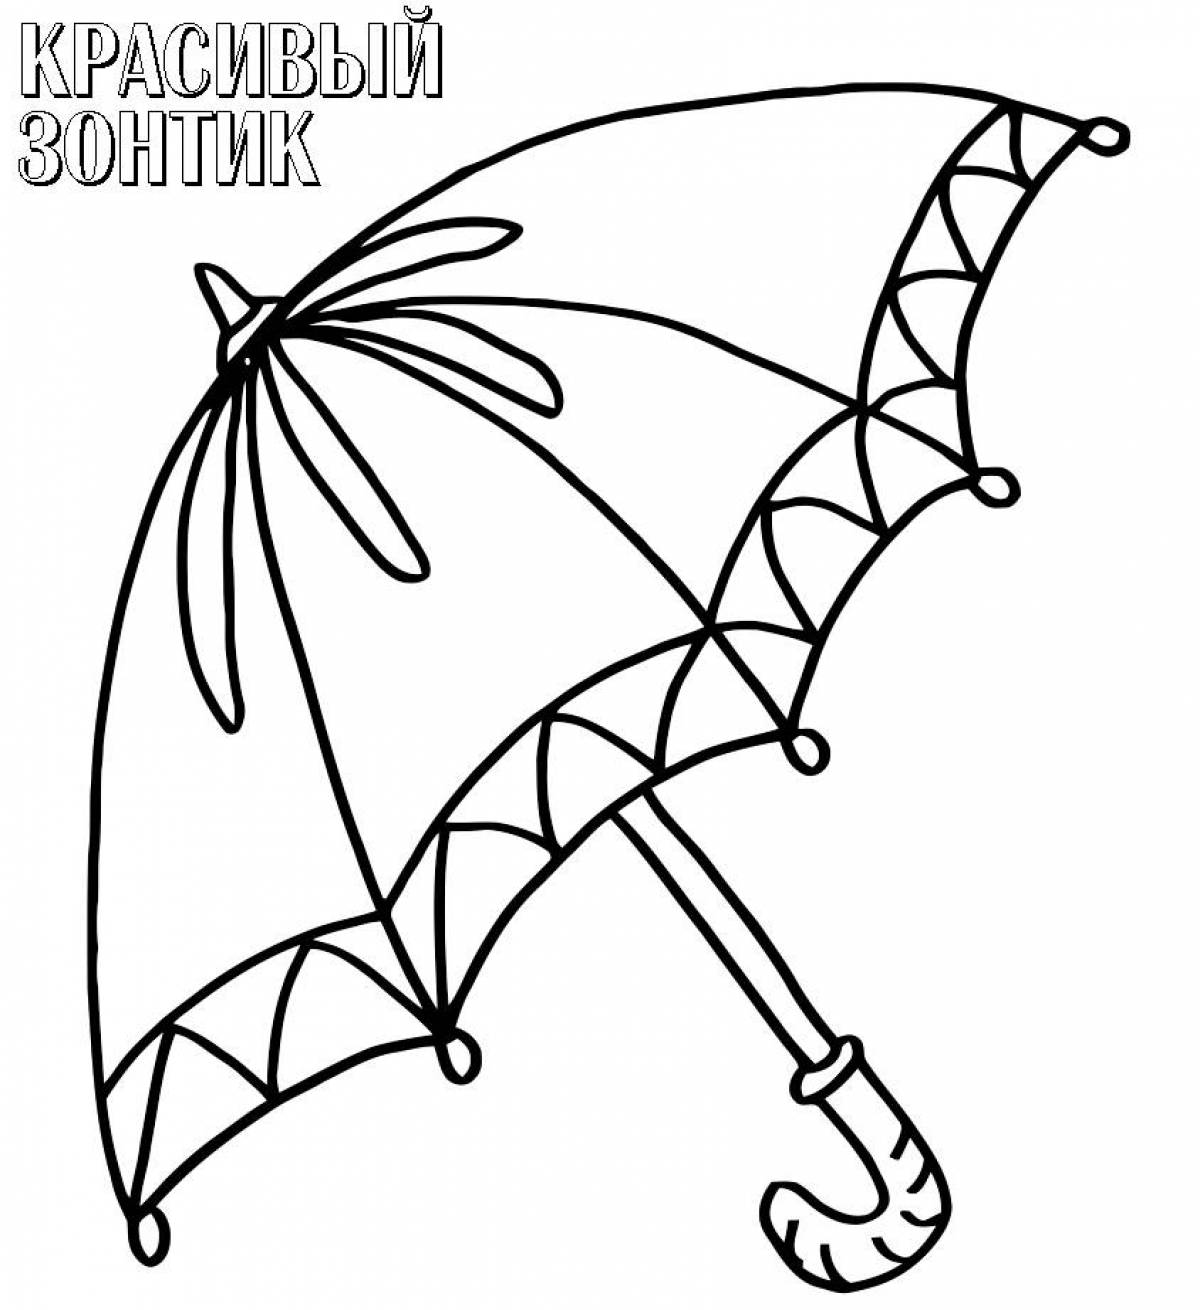 Beautiful umbrella